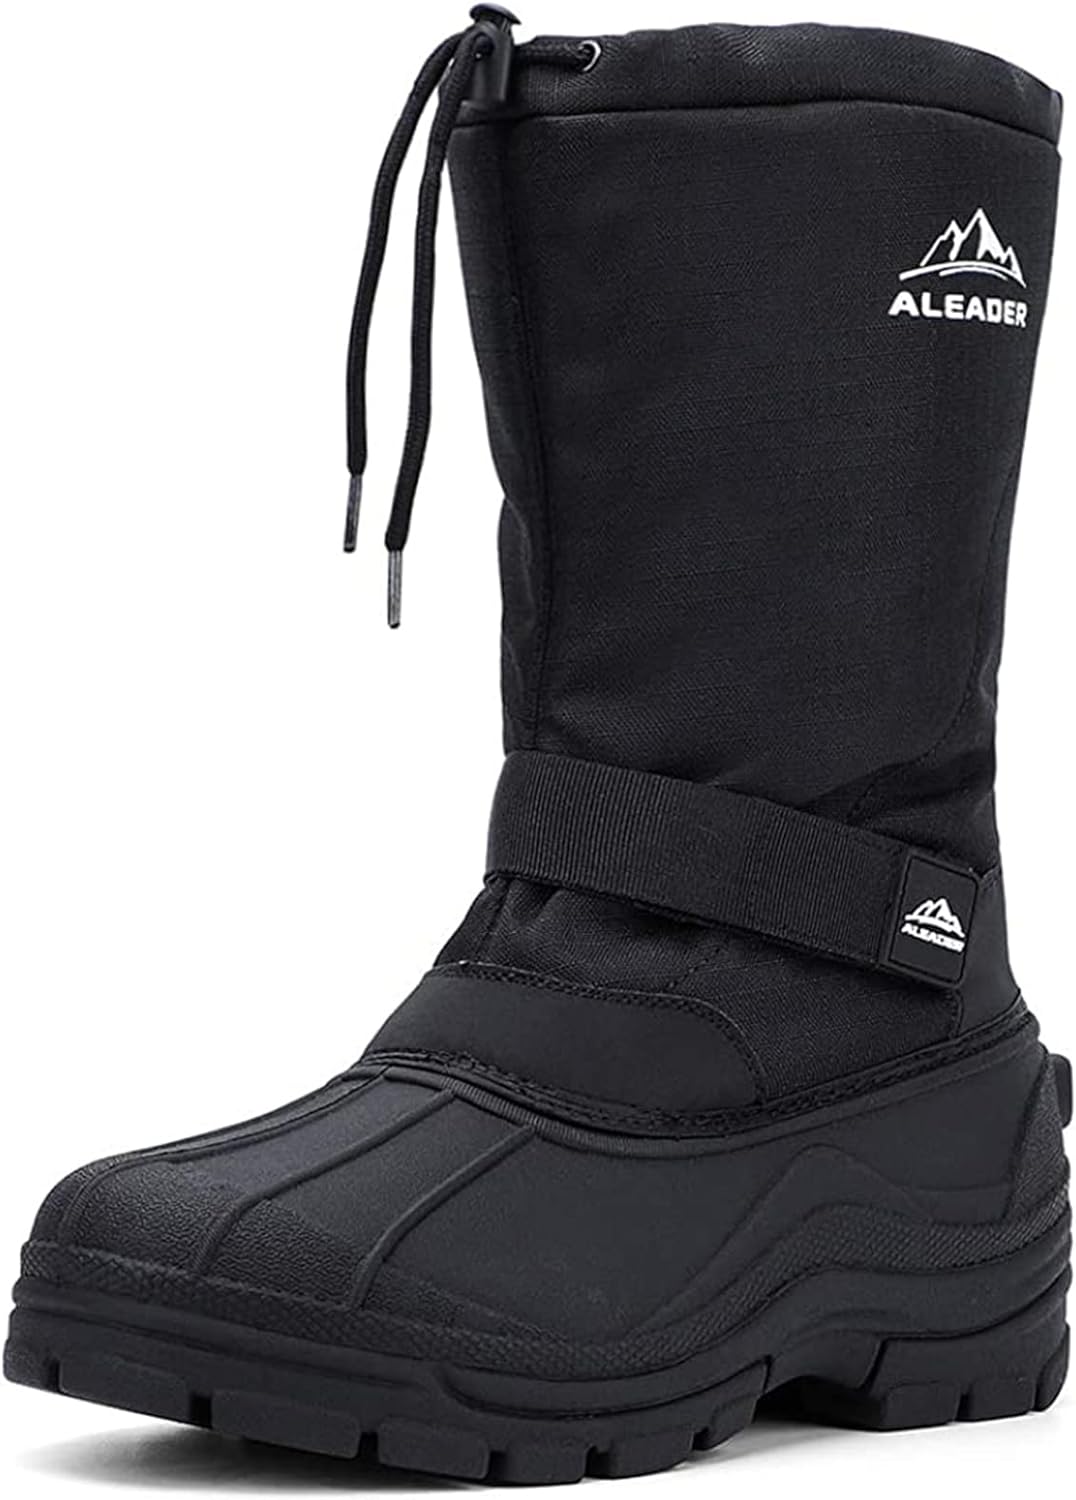 ALEADER Men' Winter Waterproof Insulated Shell Warm Inner Comfortable Outdoor Snow Boots